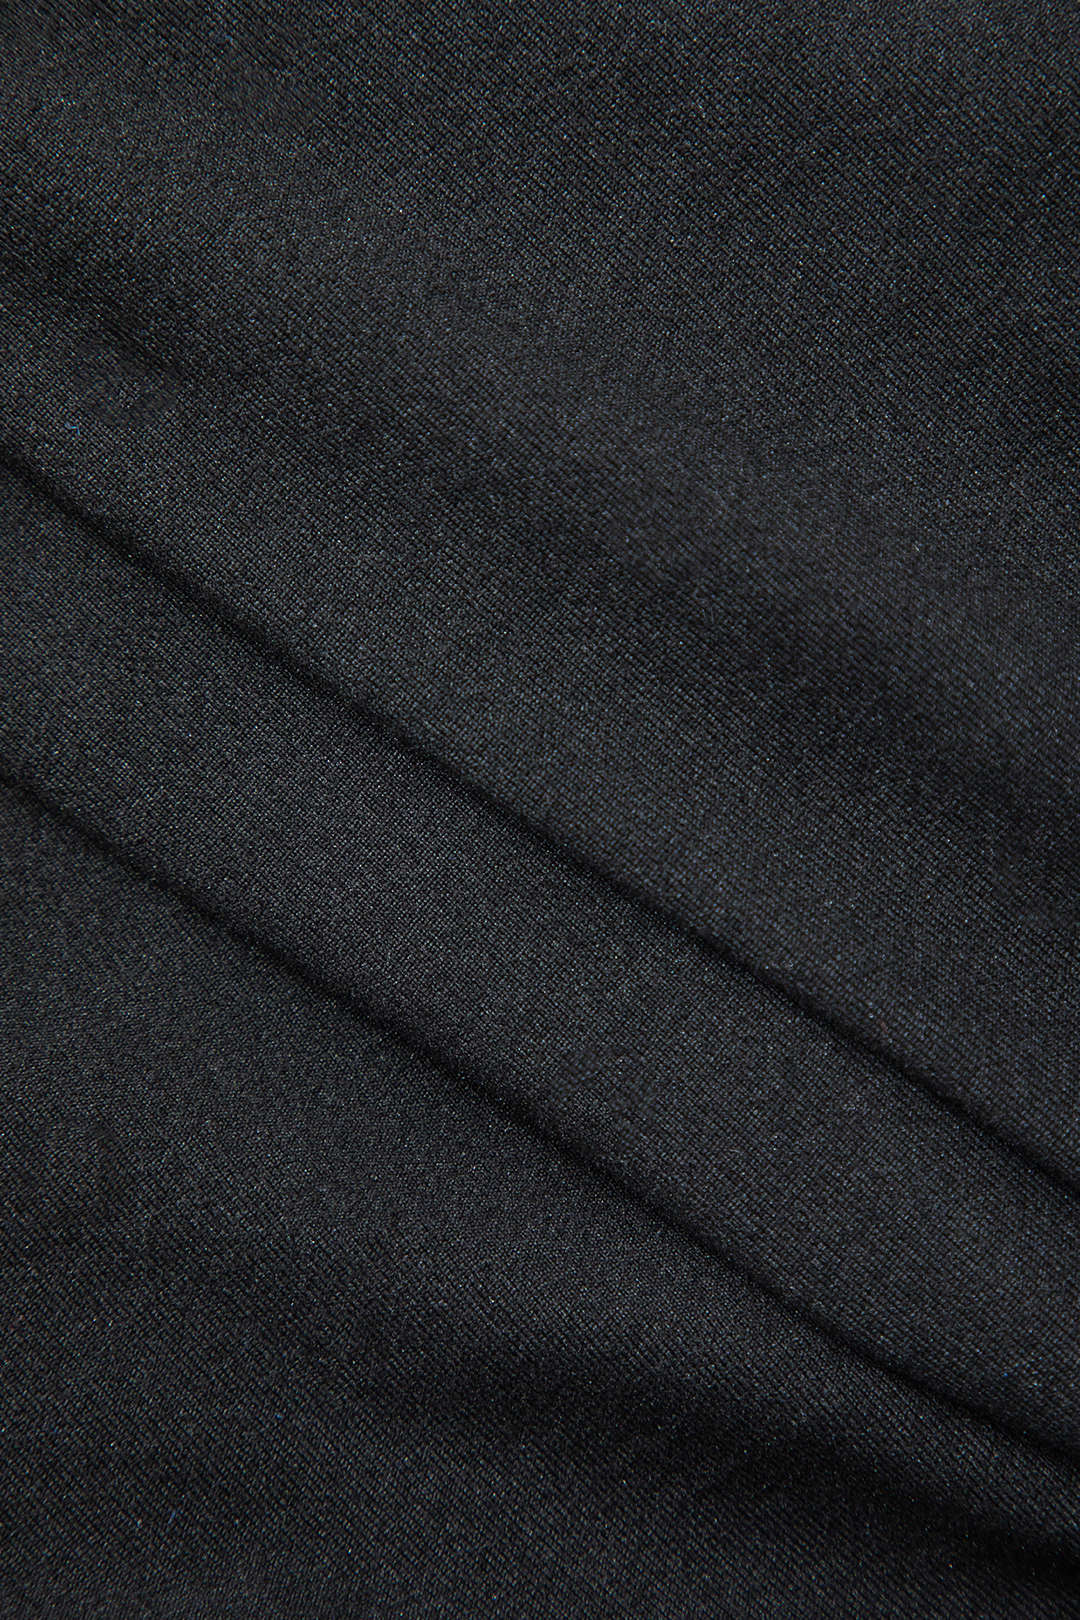 Ring Detail Asymmetric Long Sleeve Top And Mini Skirt Set